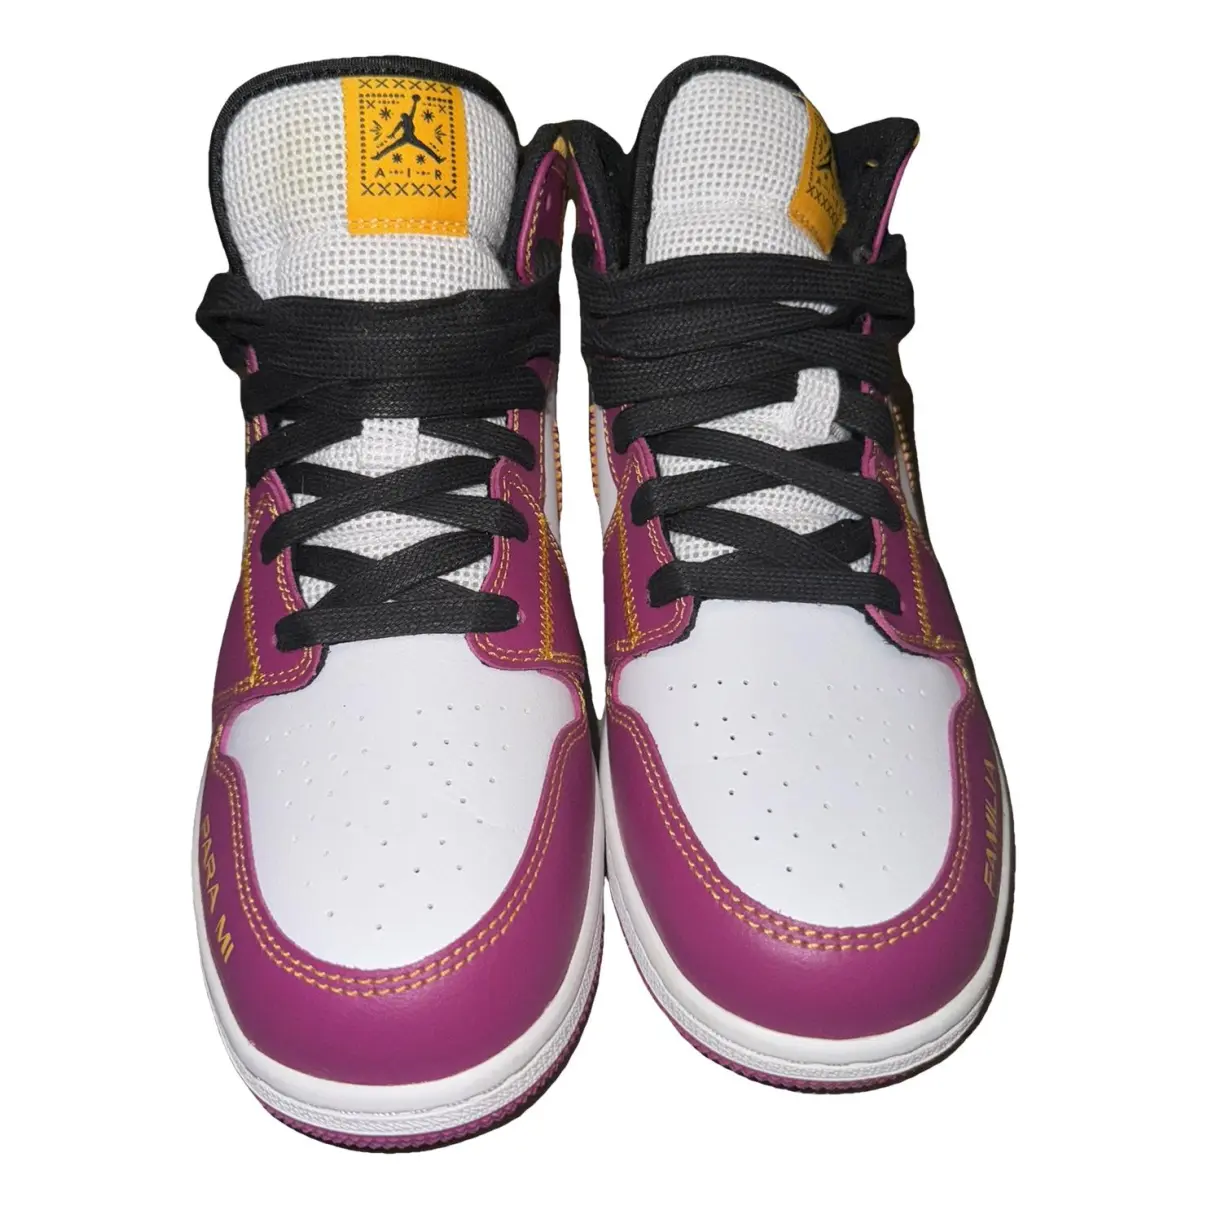 Air Jordan 1 leather trainers